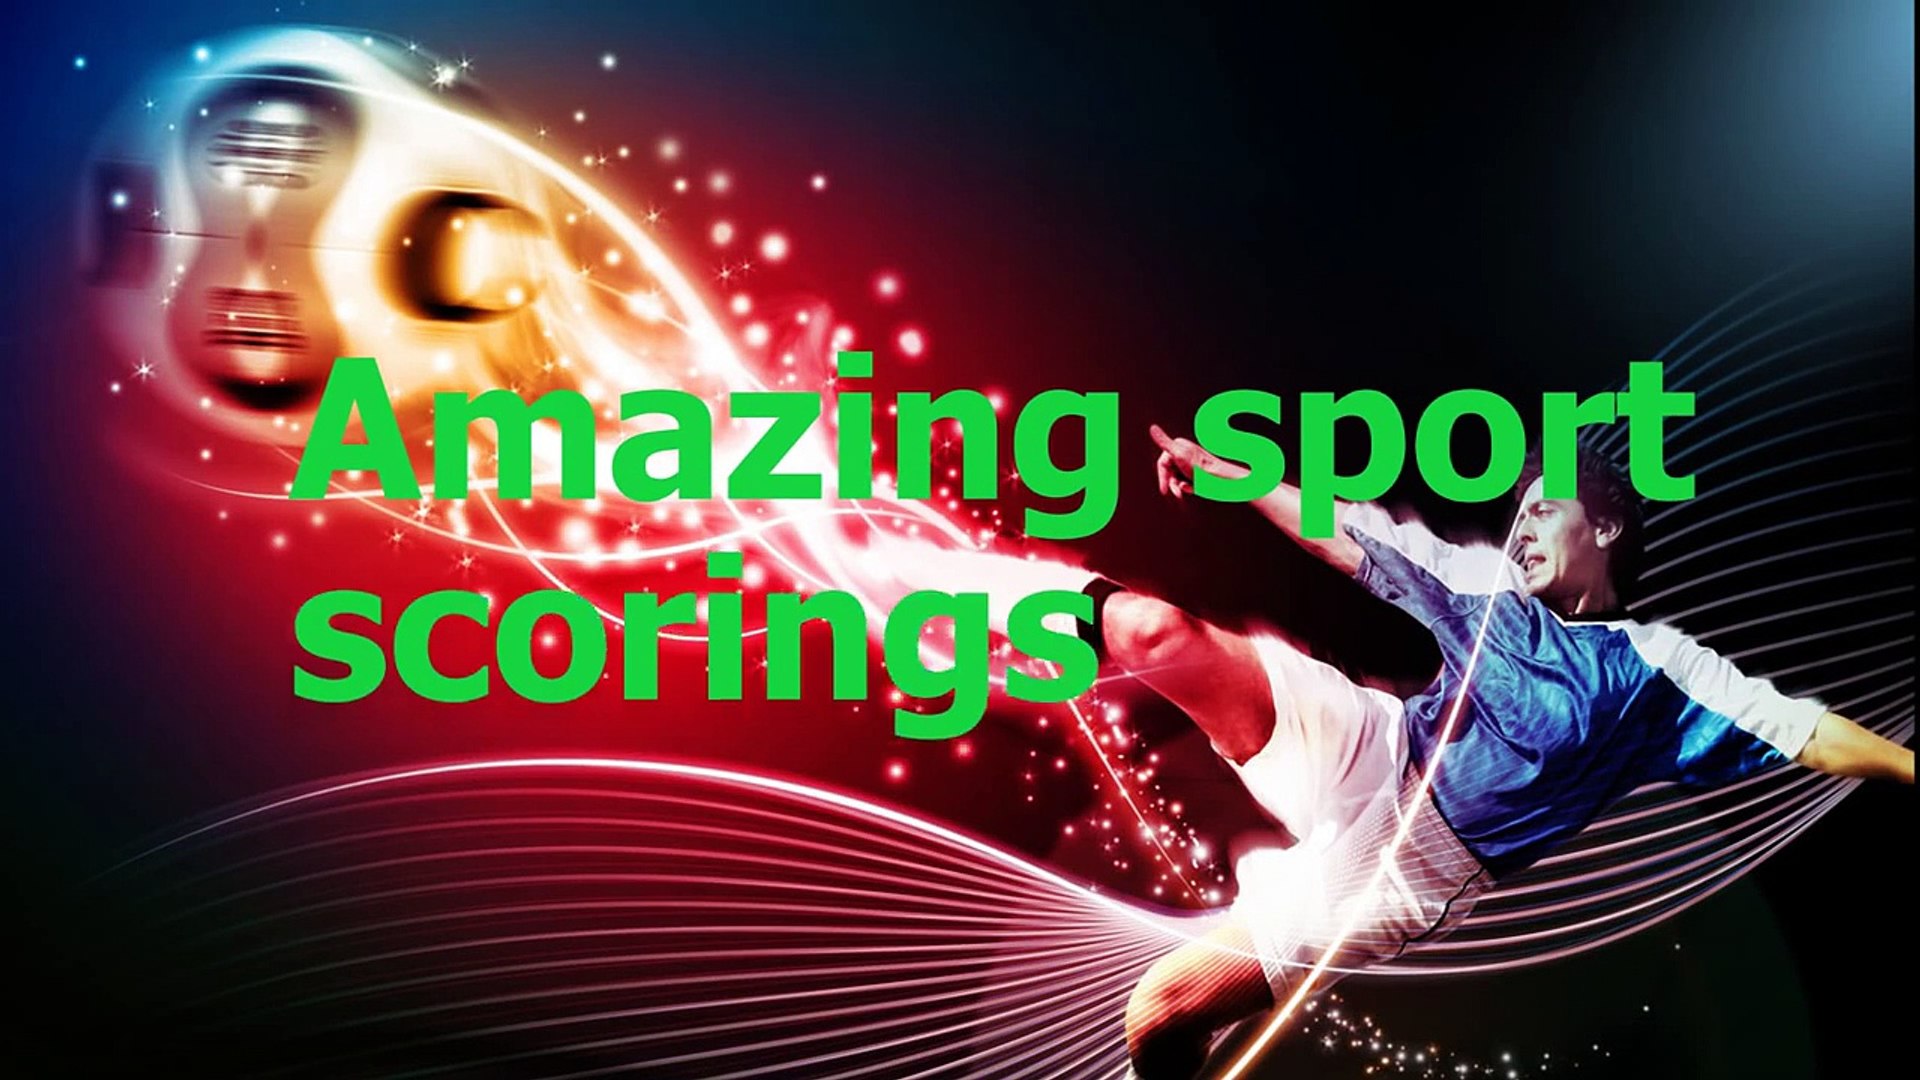 Amazing sport scores - Sport wins compilation